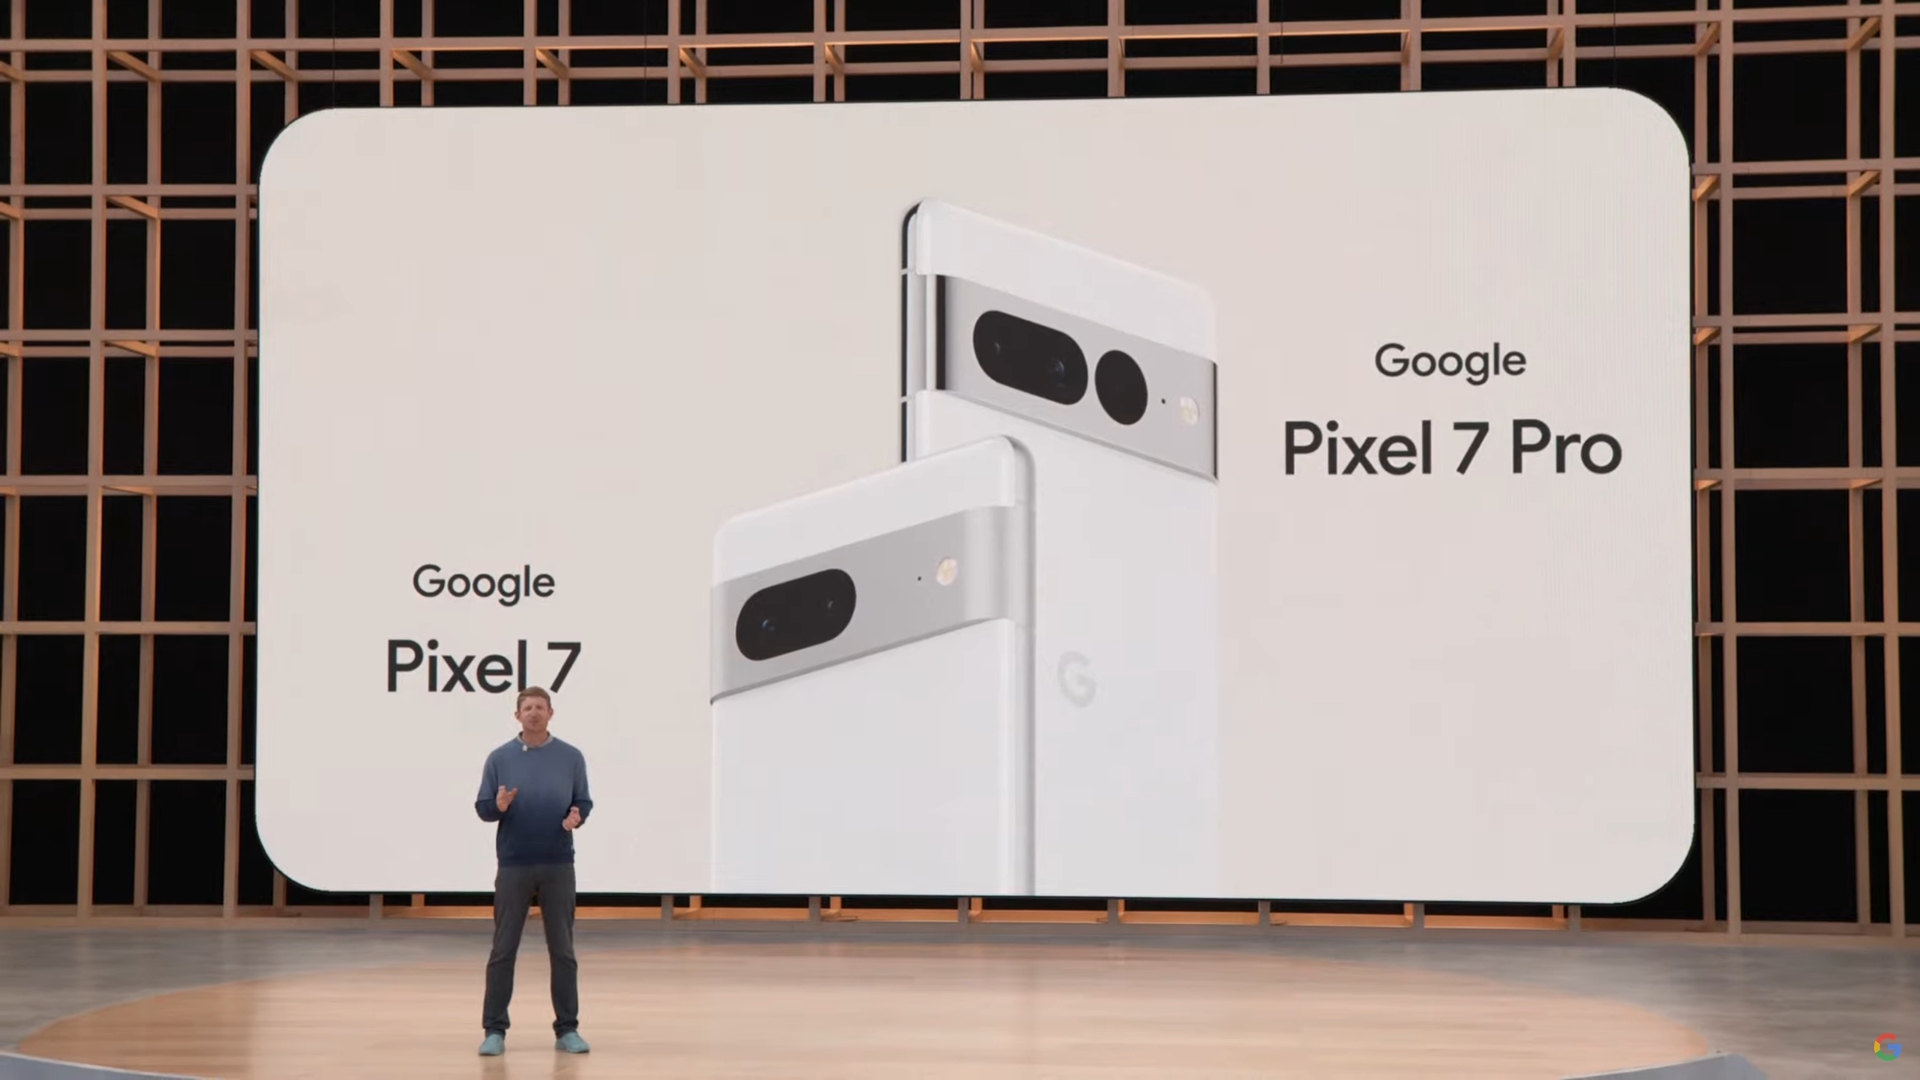 Google IO 2022 Pixel 7 was introduced